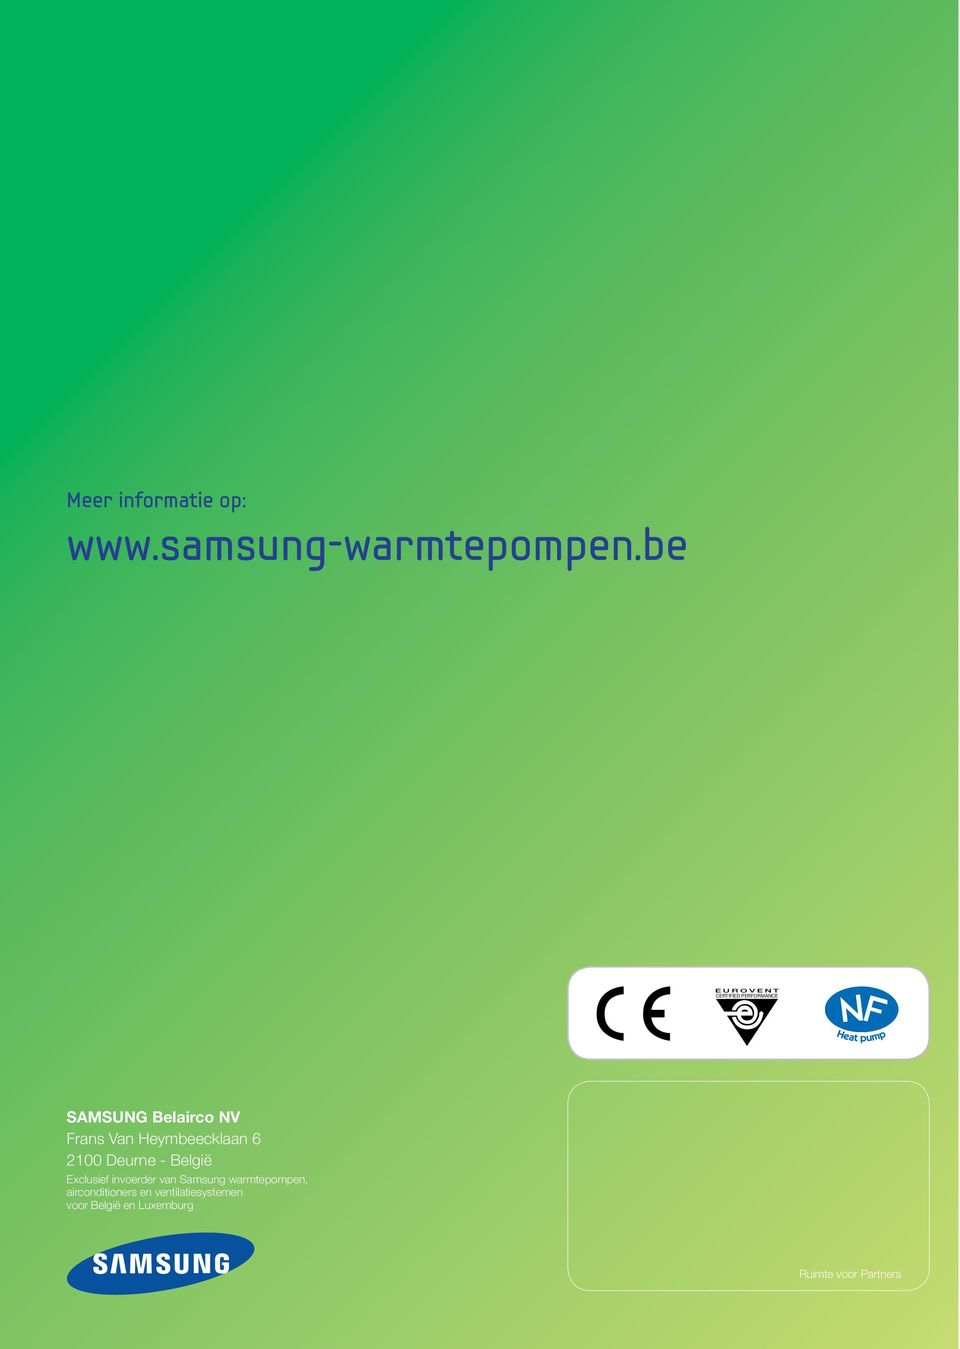 Heymbeecklaan 6 2100 Deurne - België Exclusief invoerder van Samsung